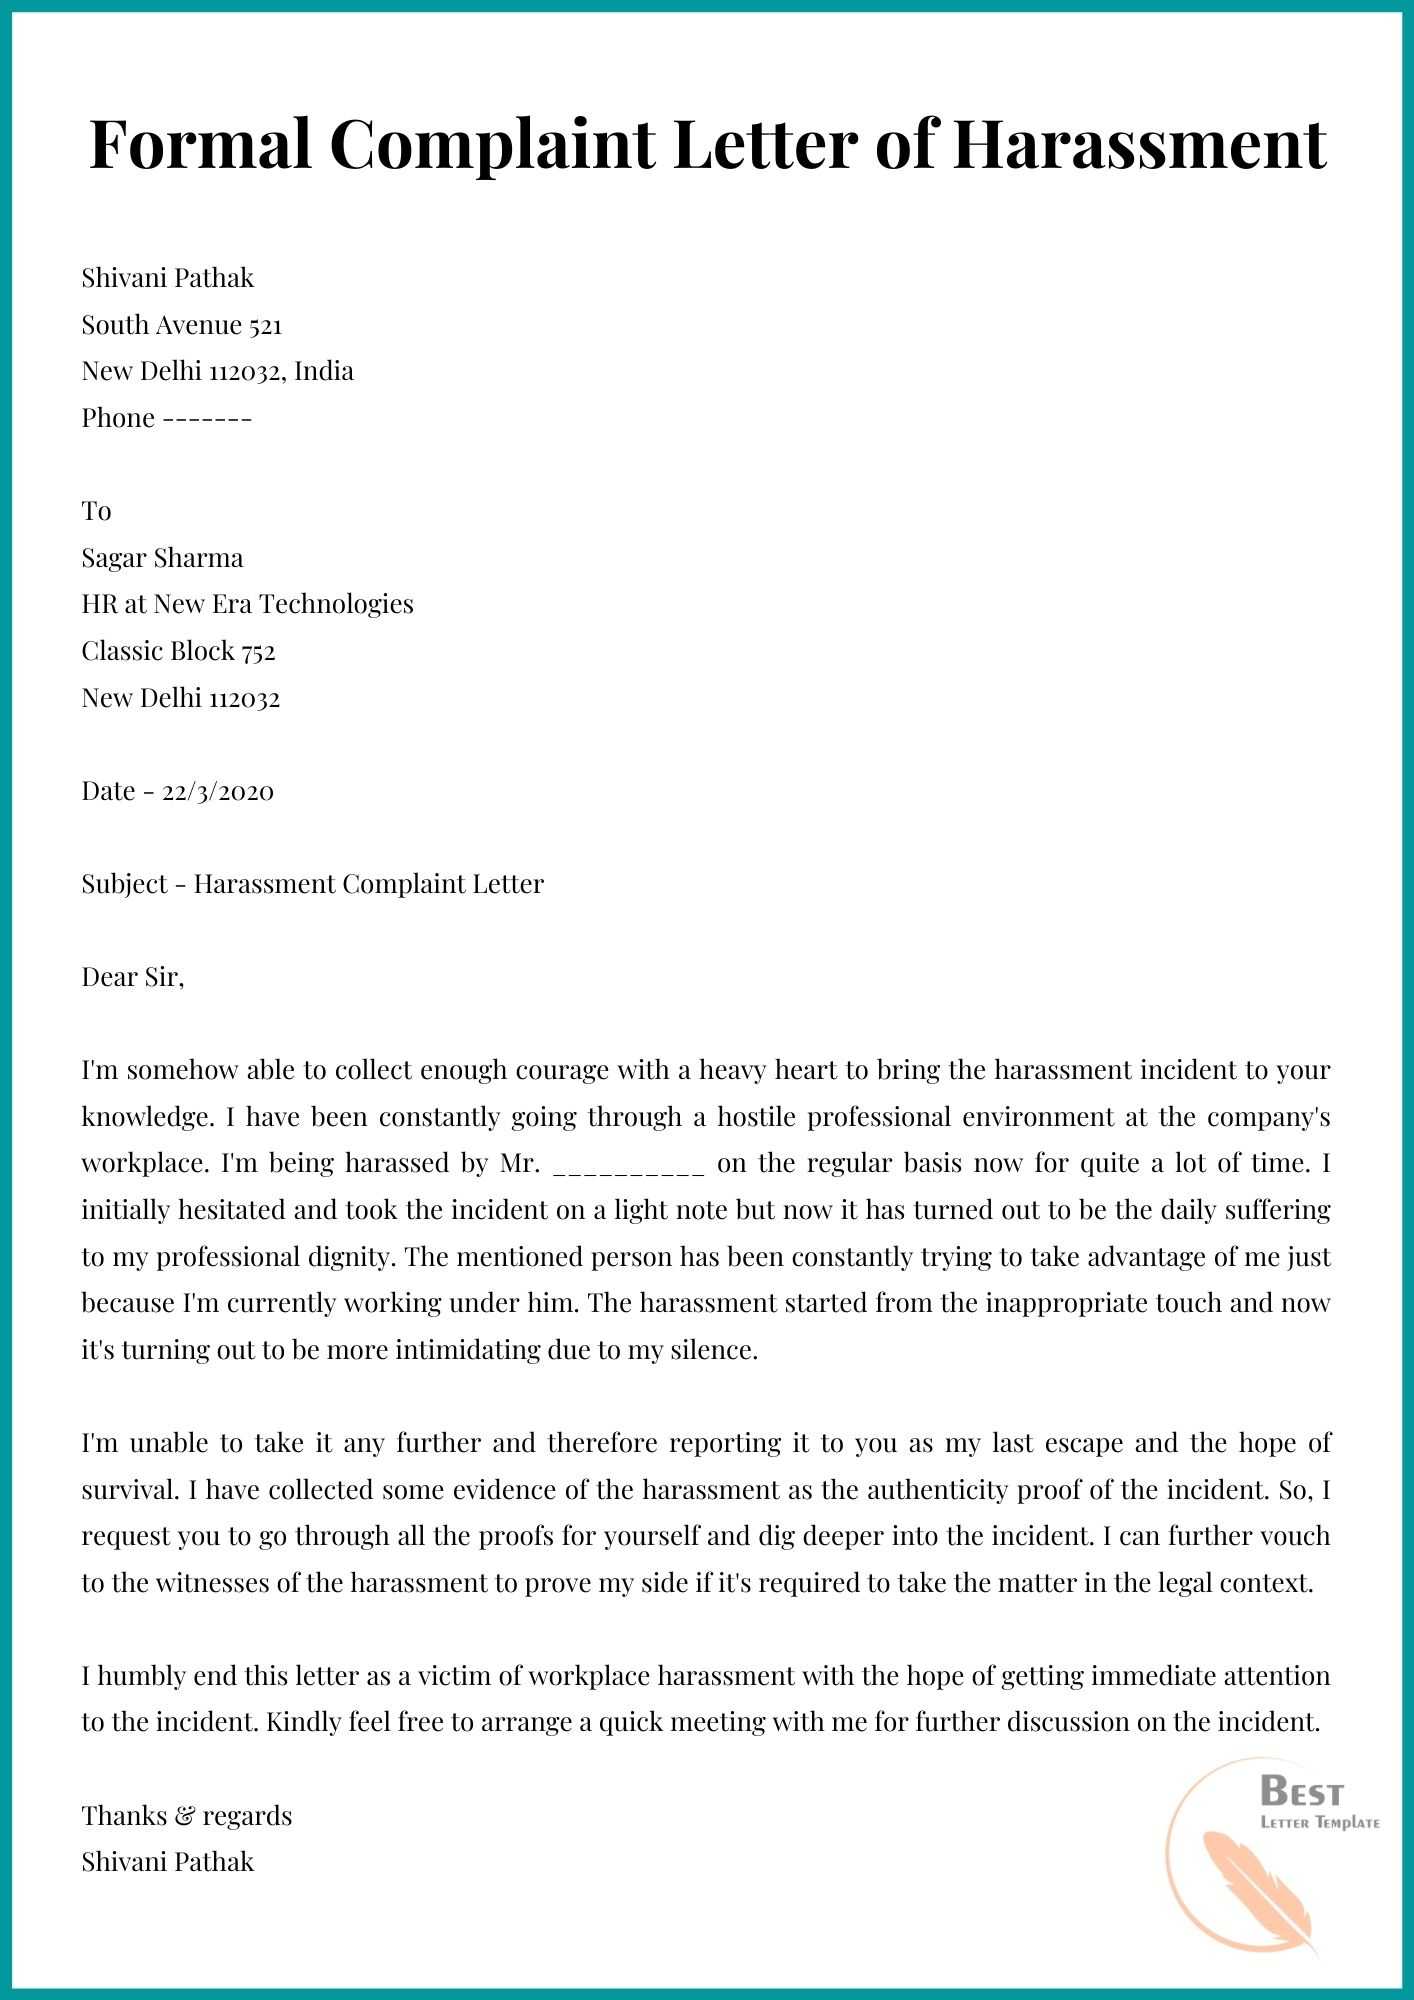 Sample Letter Of Harassment Complaint